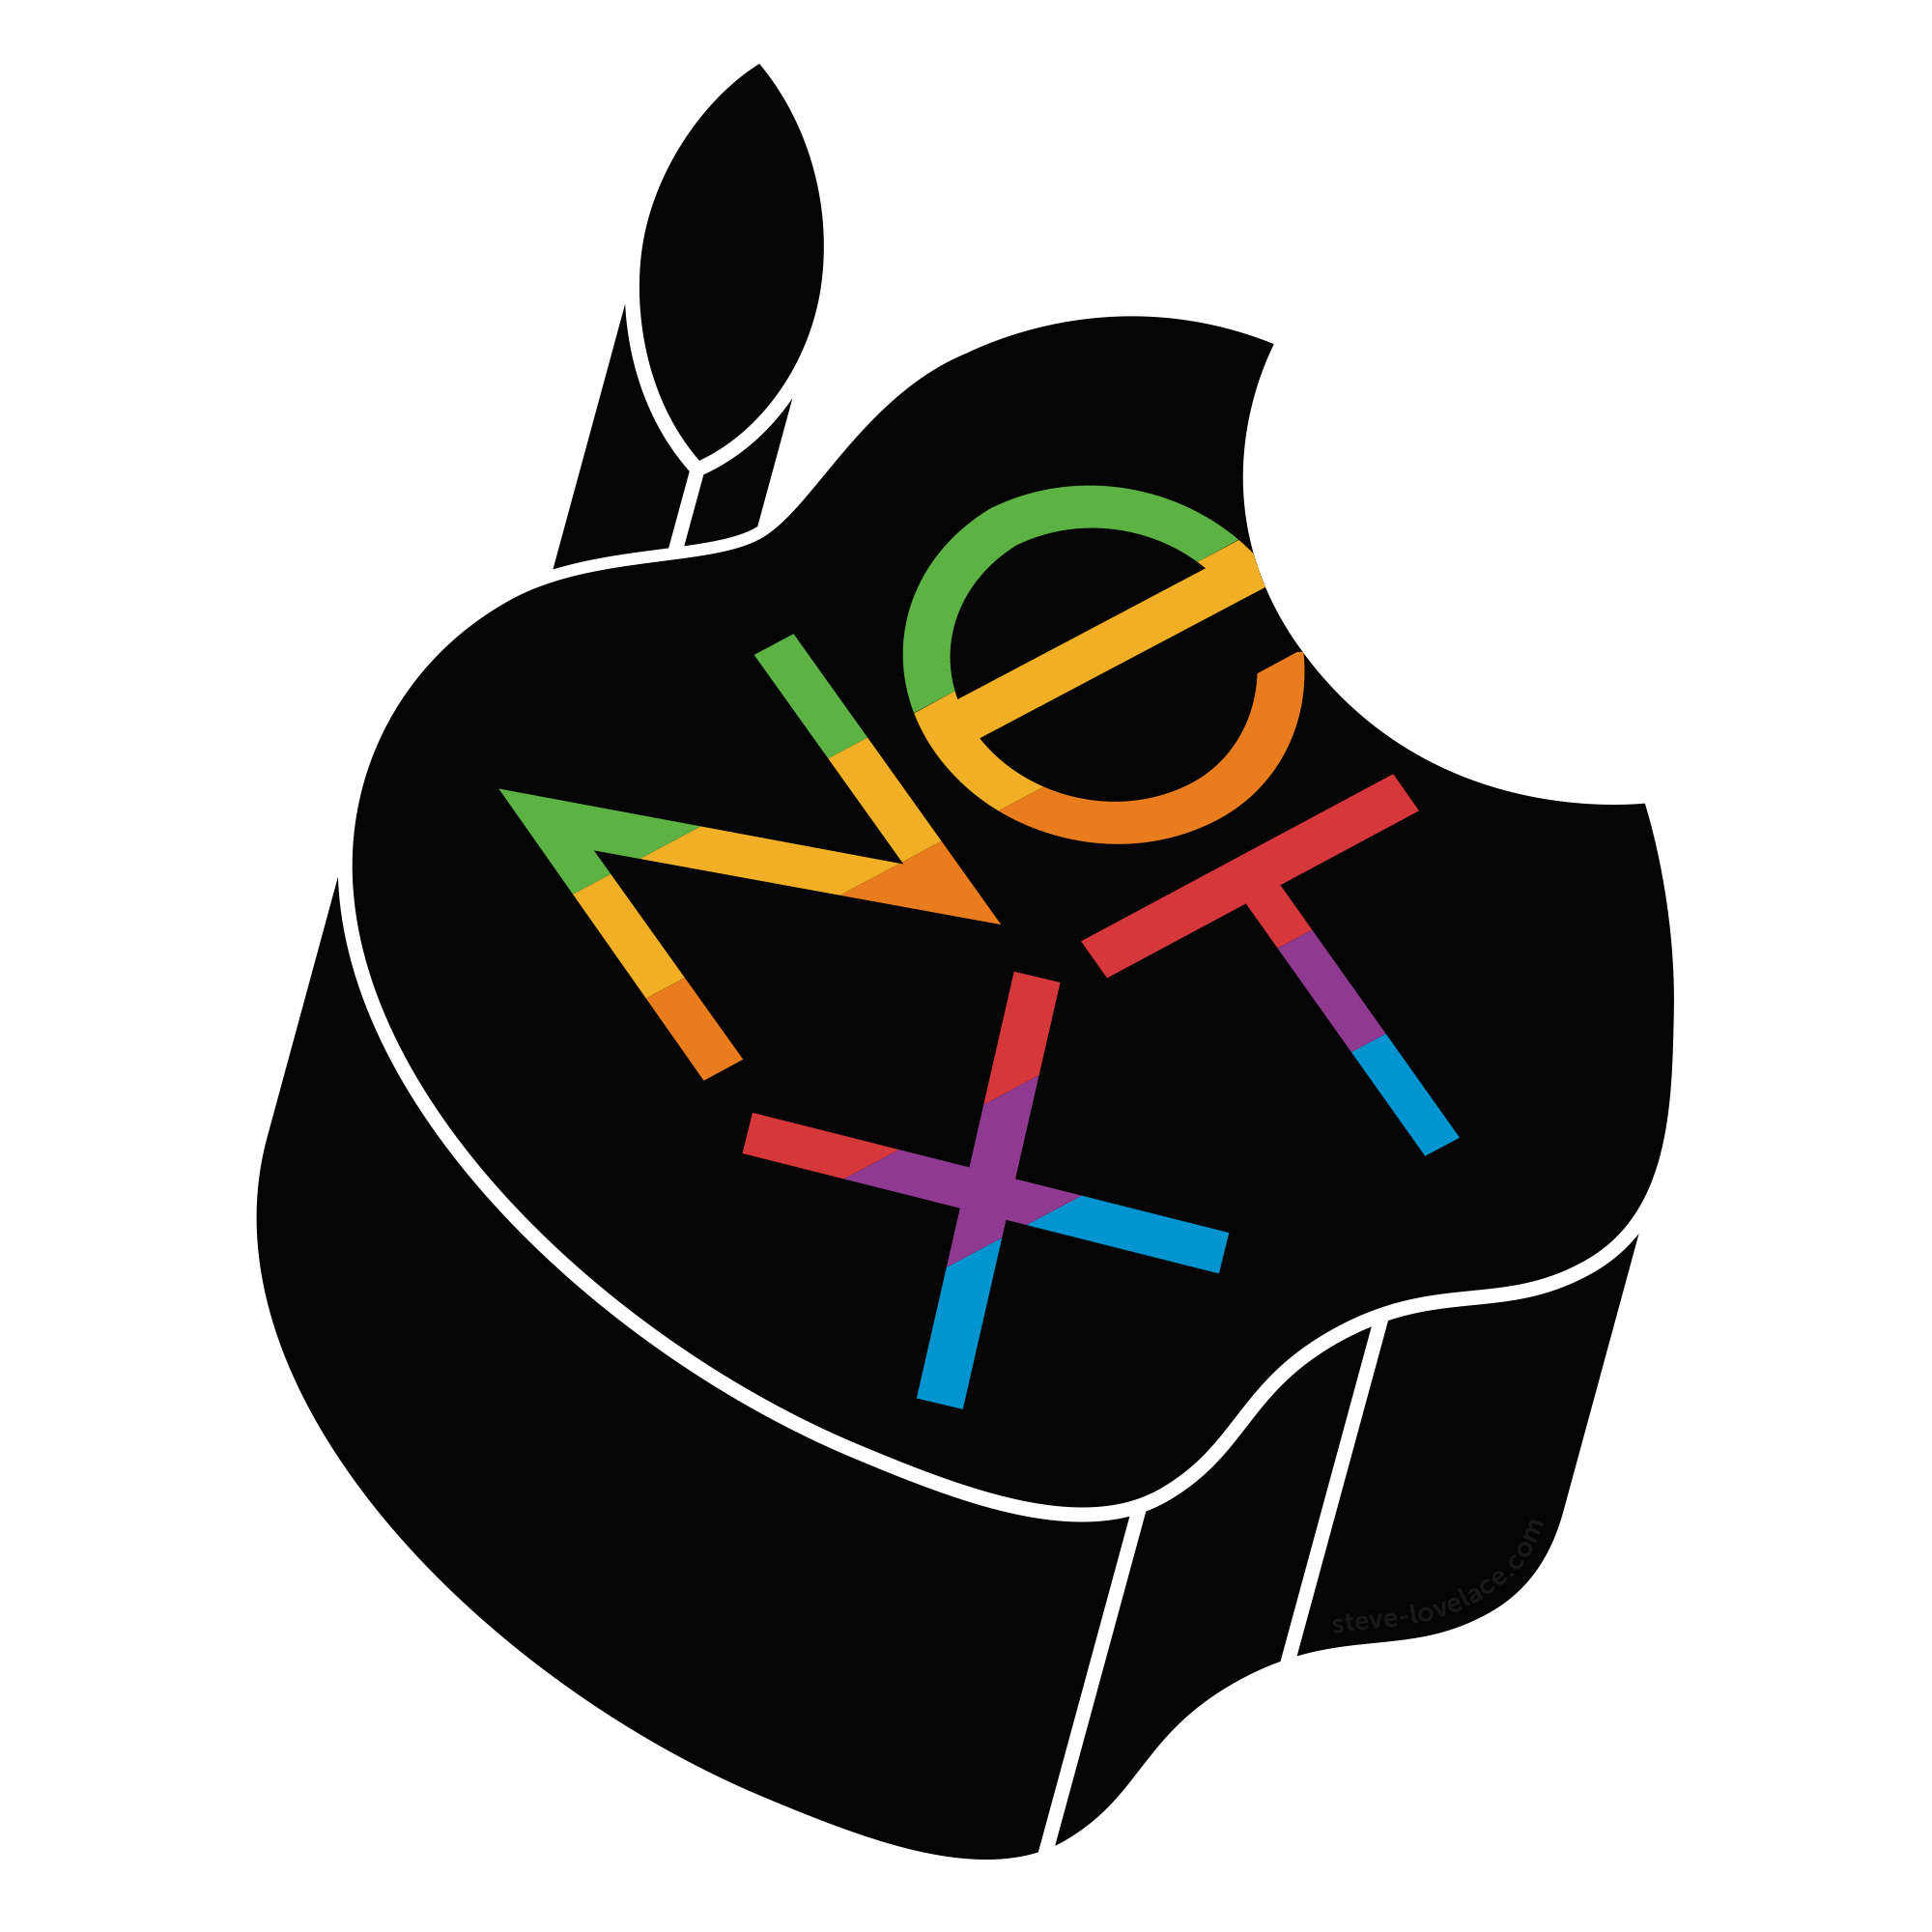 NextStep: The Granddaddy of iOS — Steve Lovelace - Steve Jobs Apple Logo